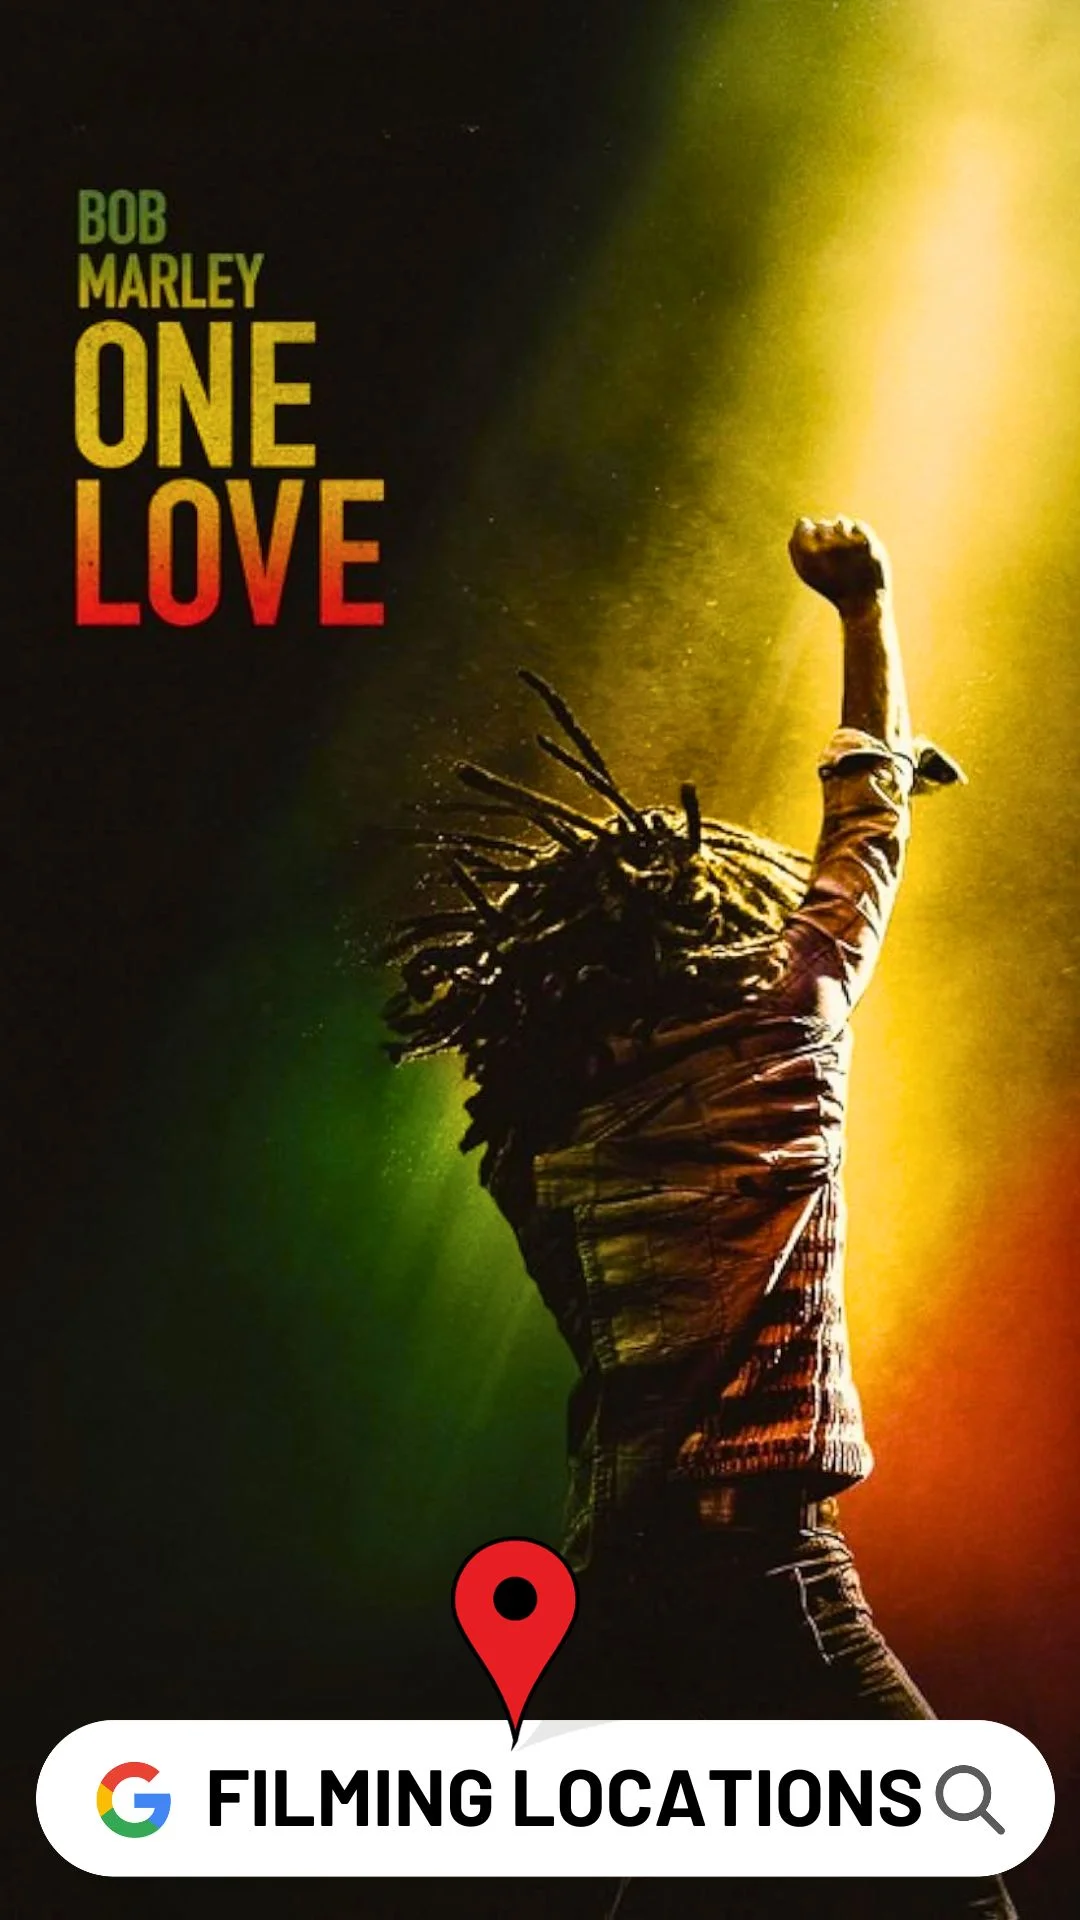 Bob Marley One Love Filming Locations